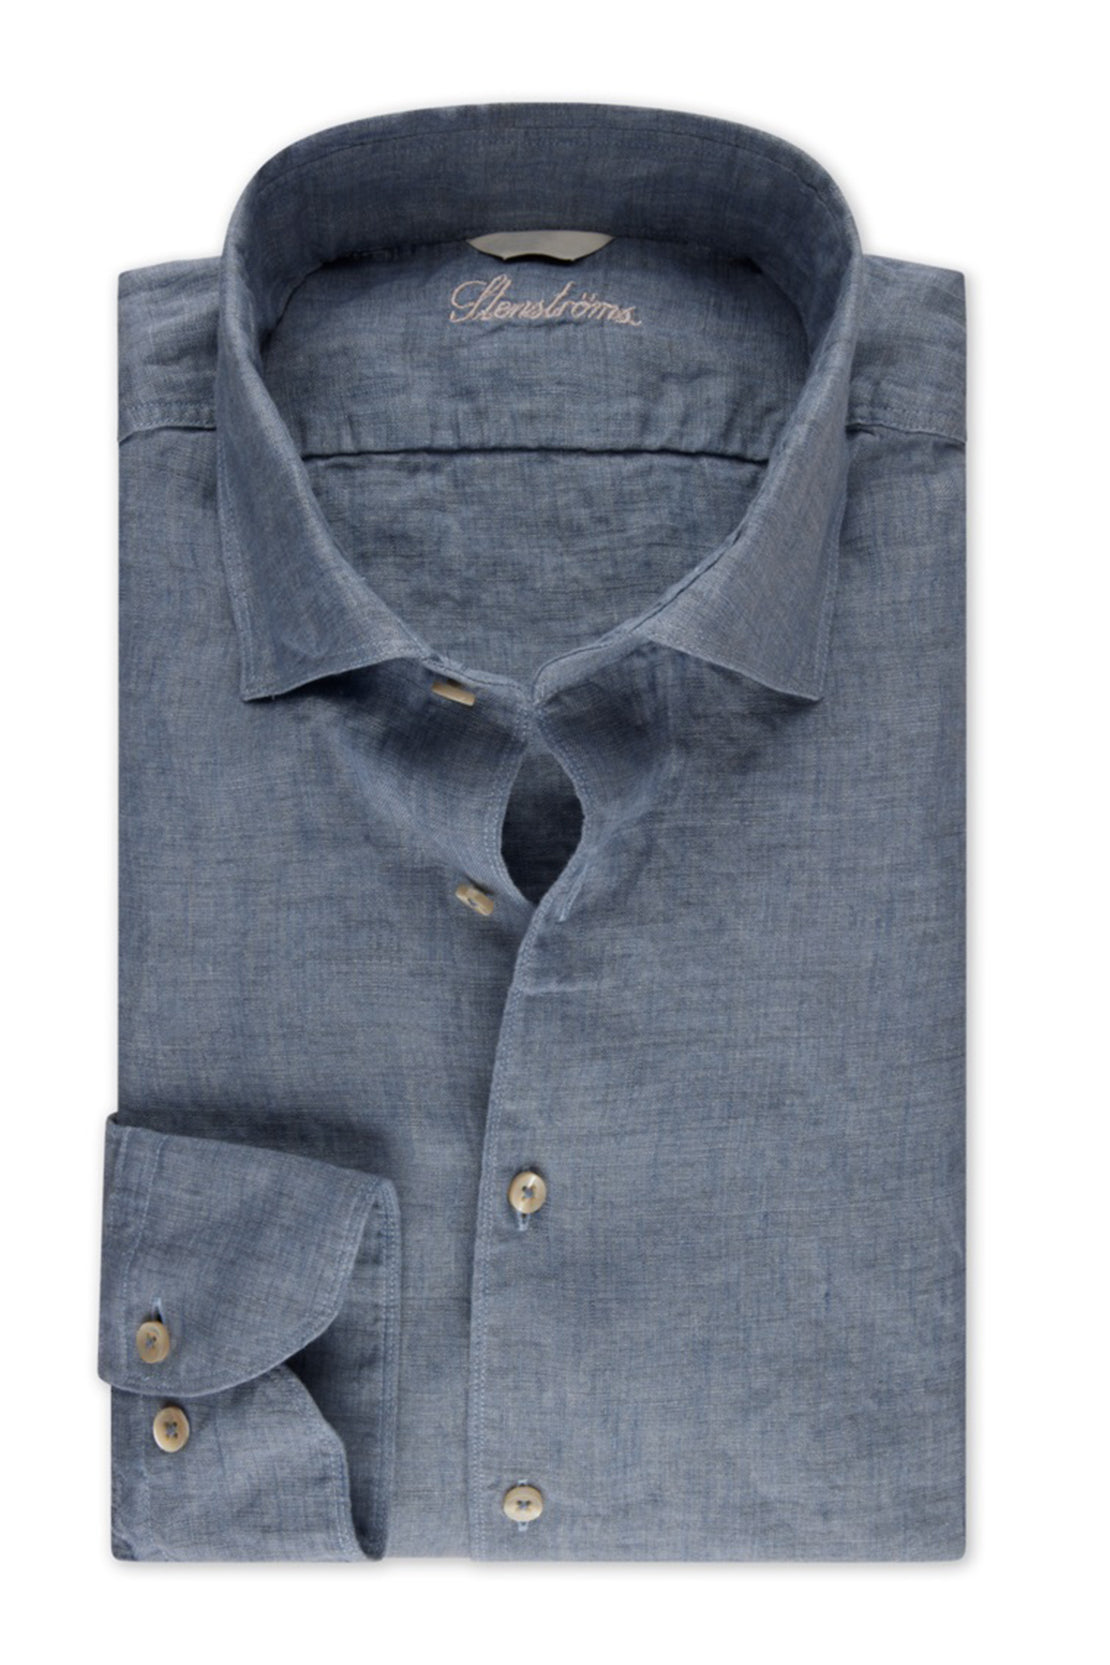 STENSTROMS - SLIMLINE Indigo Blue Linen Shirt 7747217970800